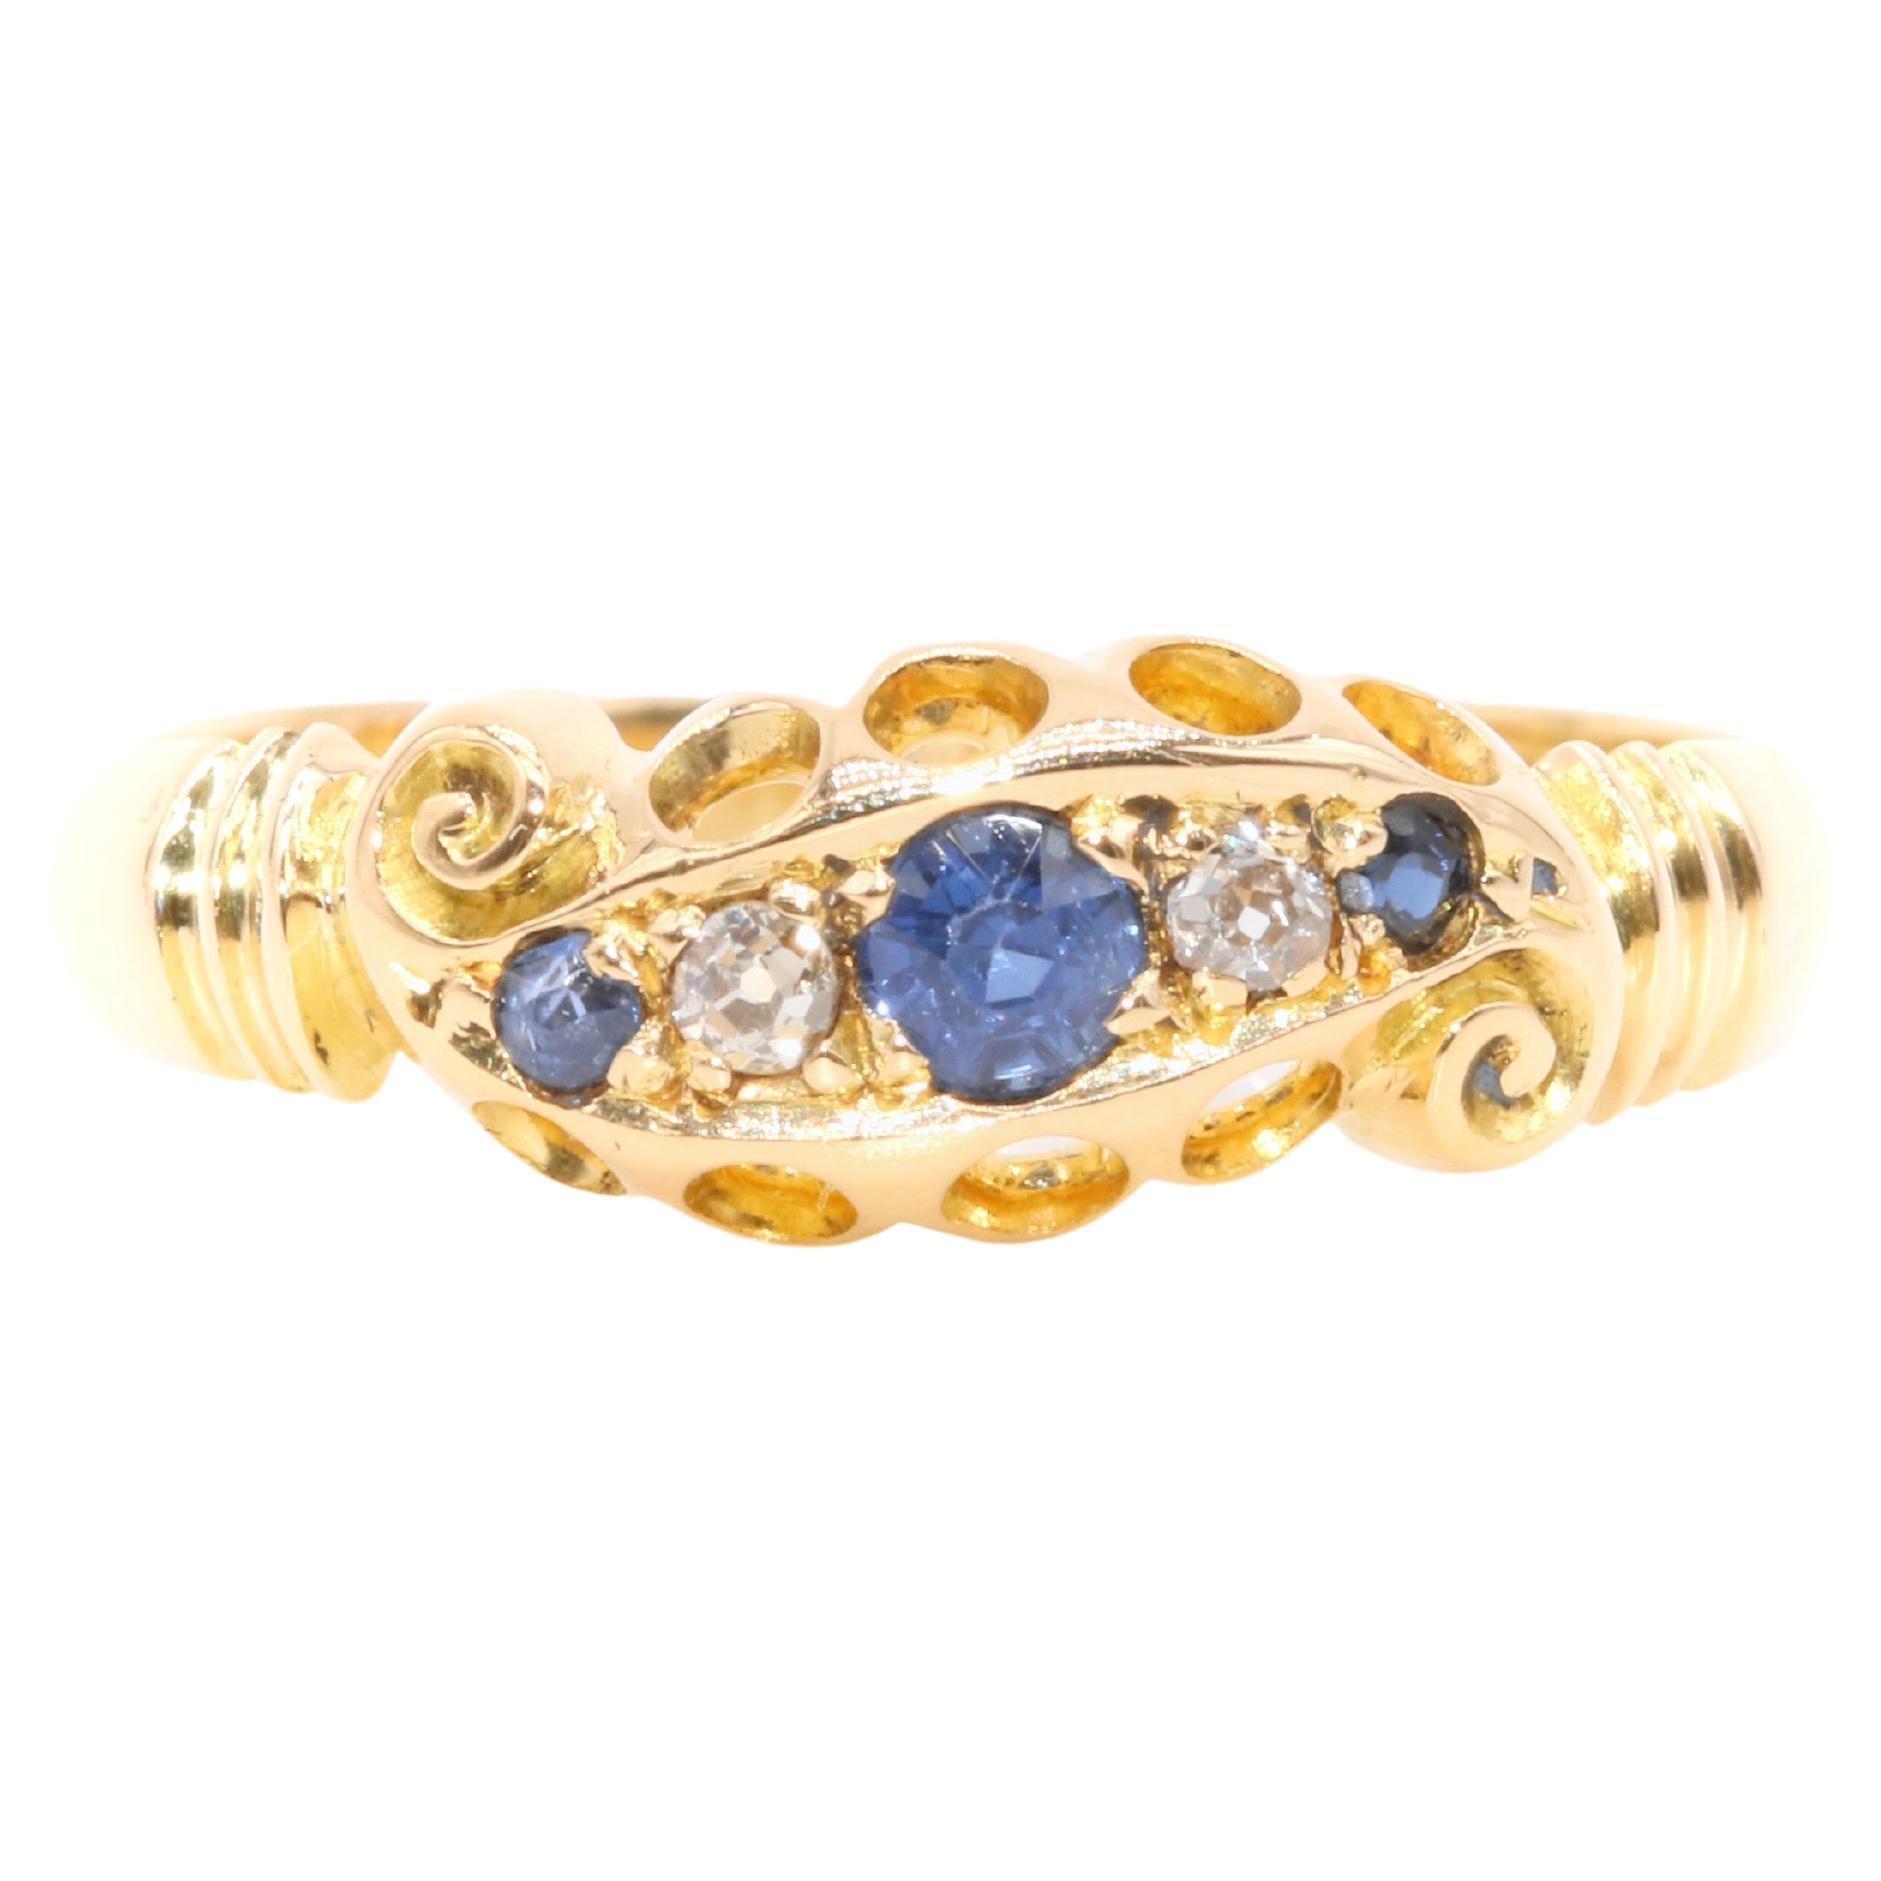 Antique Edwardian 18K Yellow Gold Sapphire and Diamond 5 Stone Ring